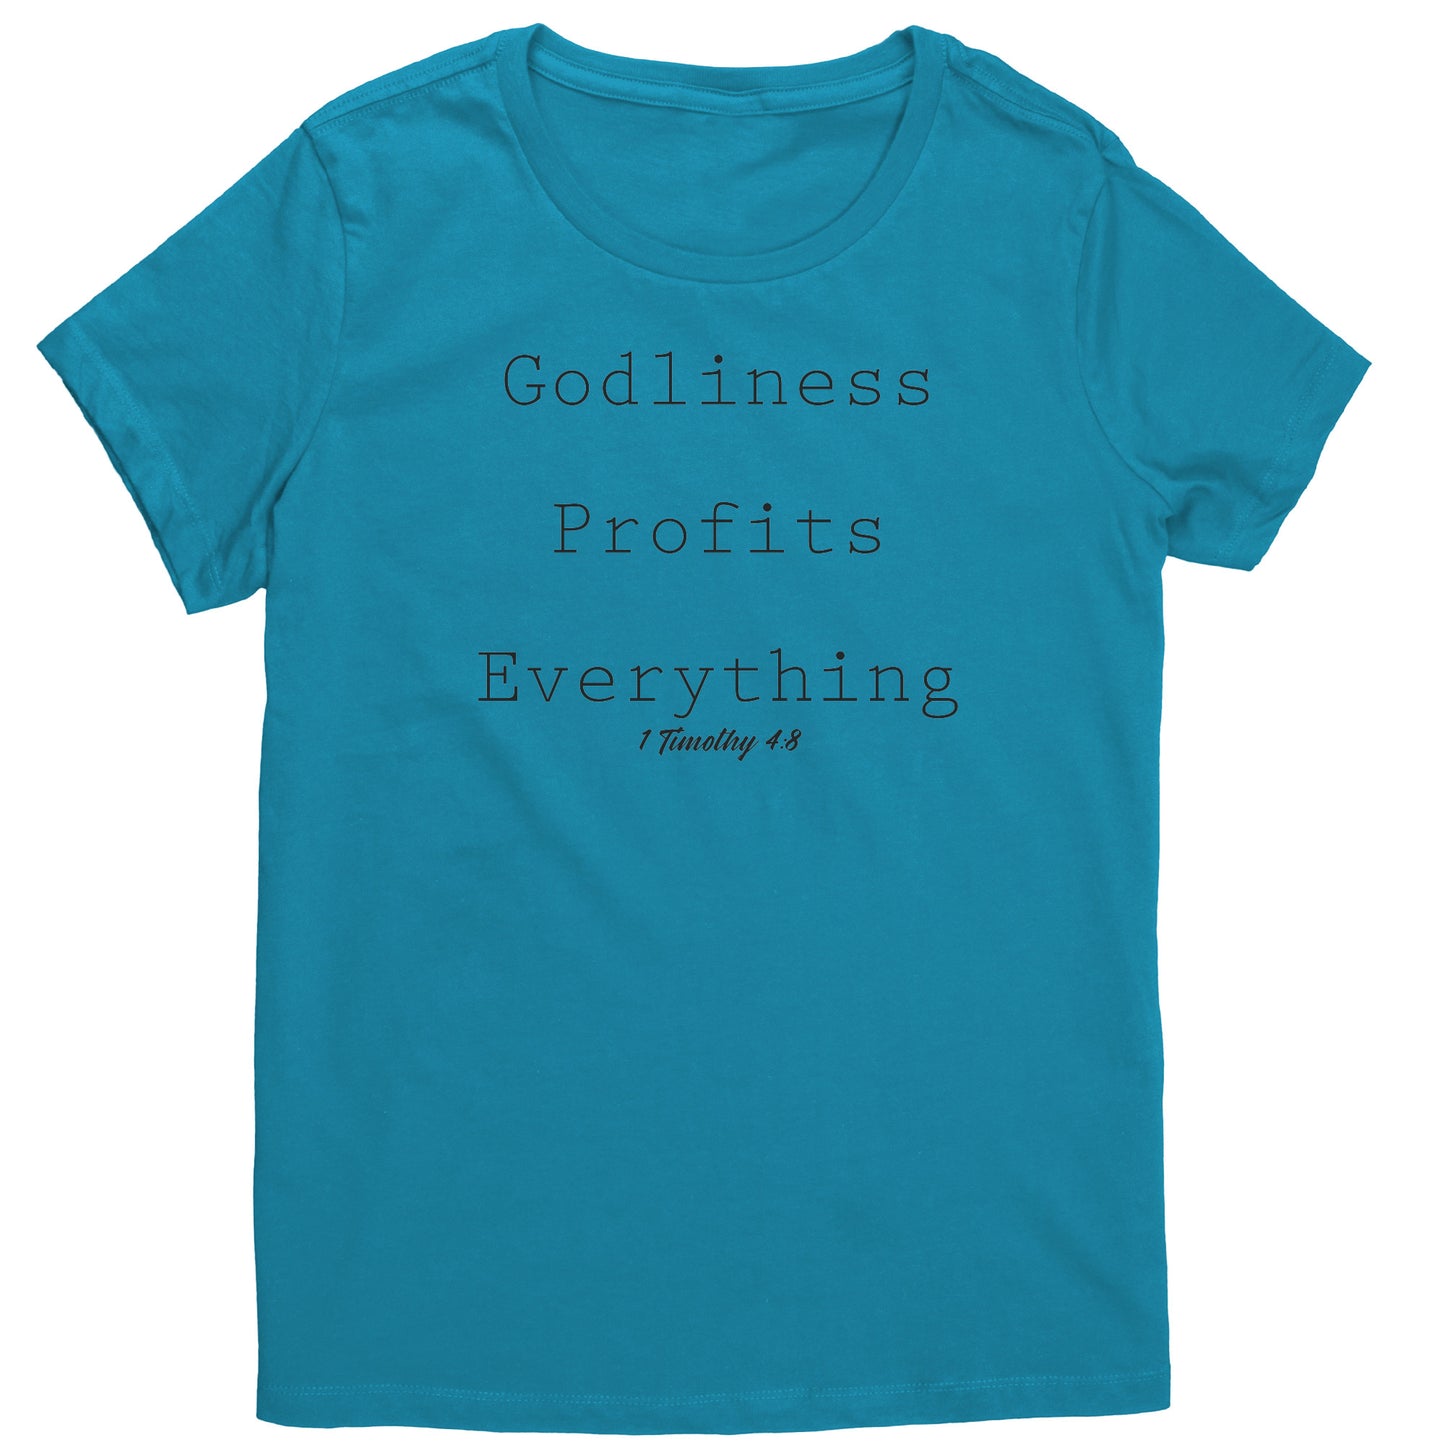 Godliness Profits Everything 1 Timothy 4:8 Women's T-Shirt Part 1